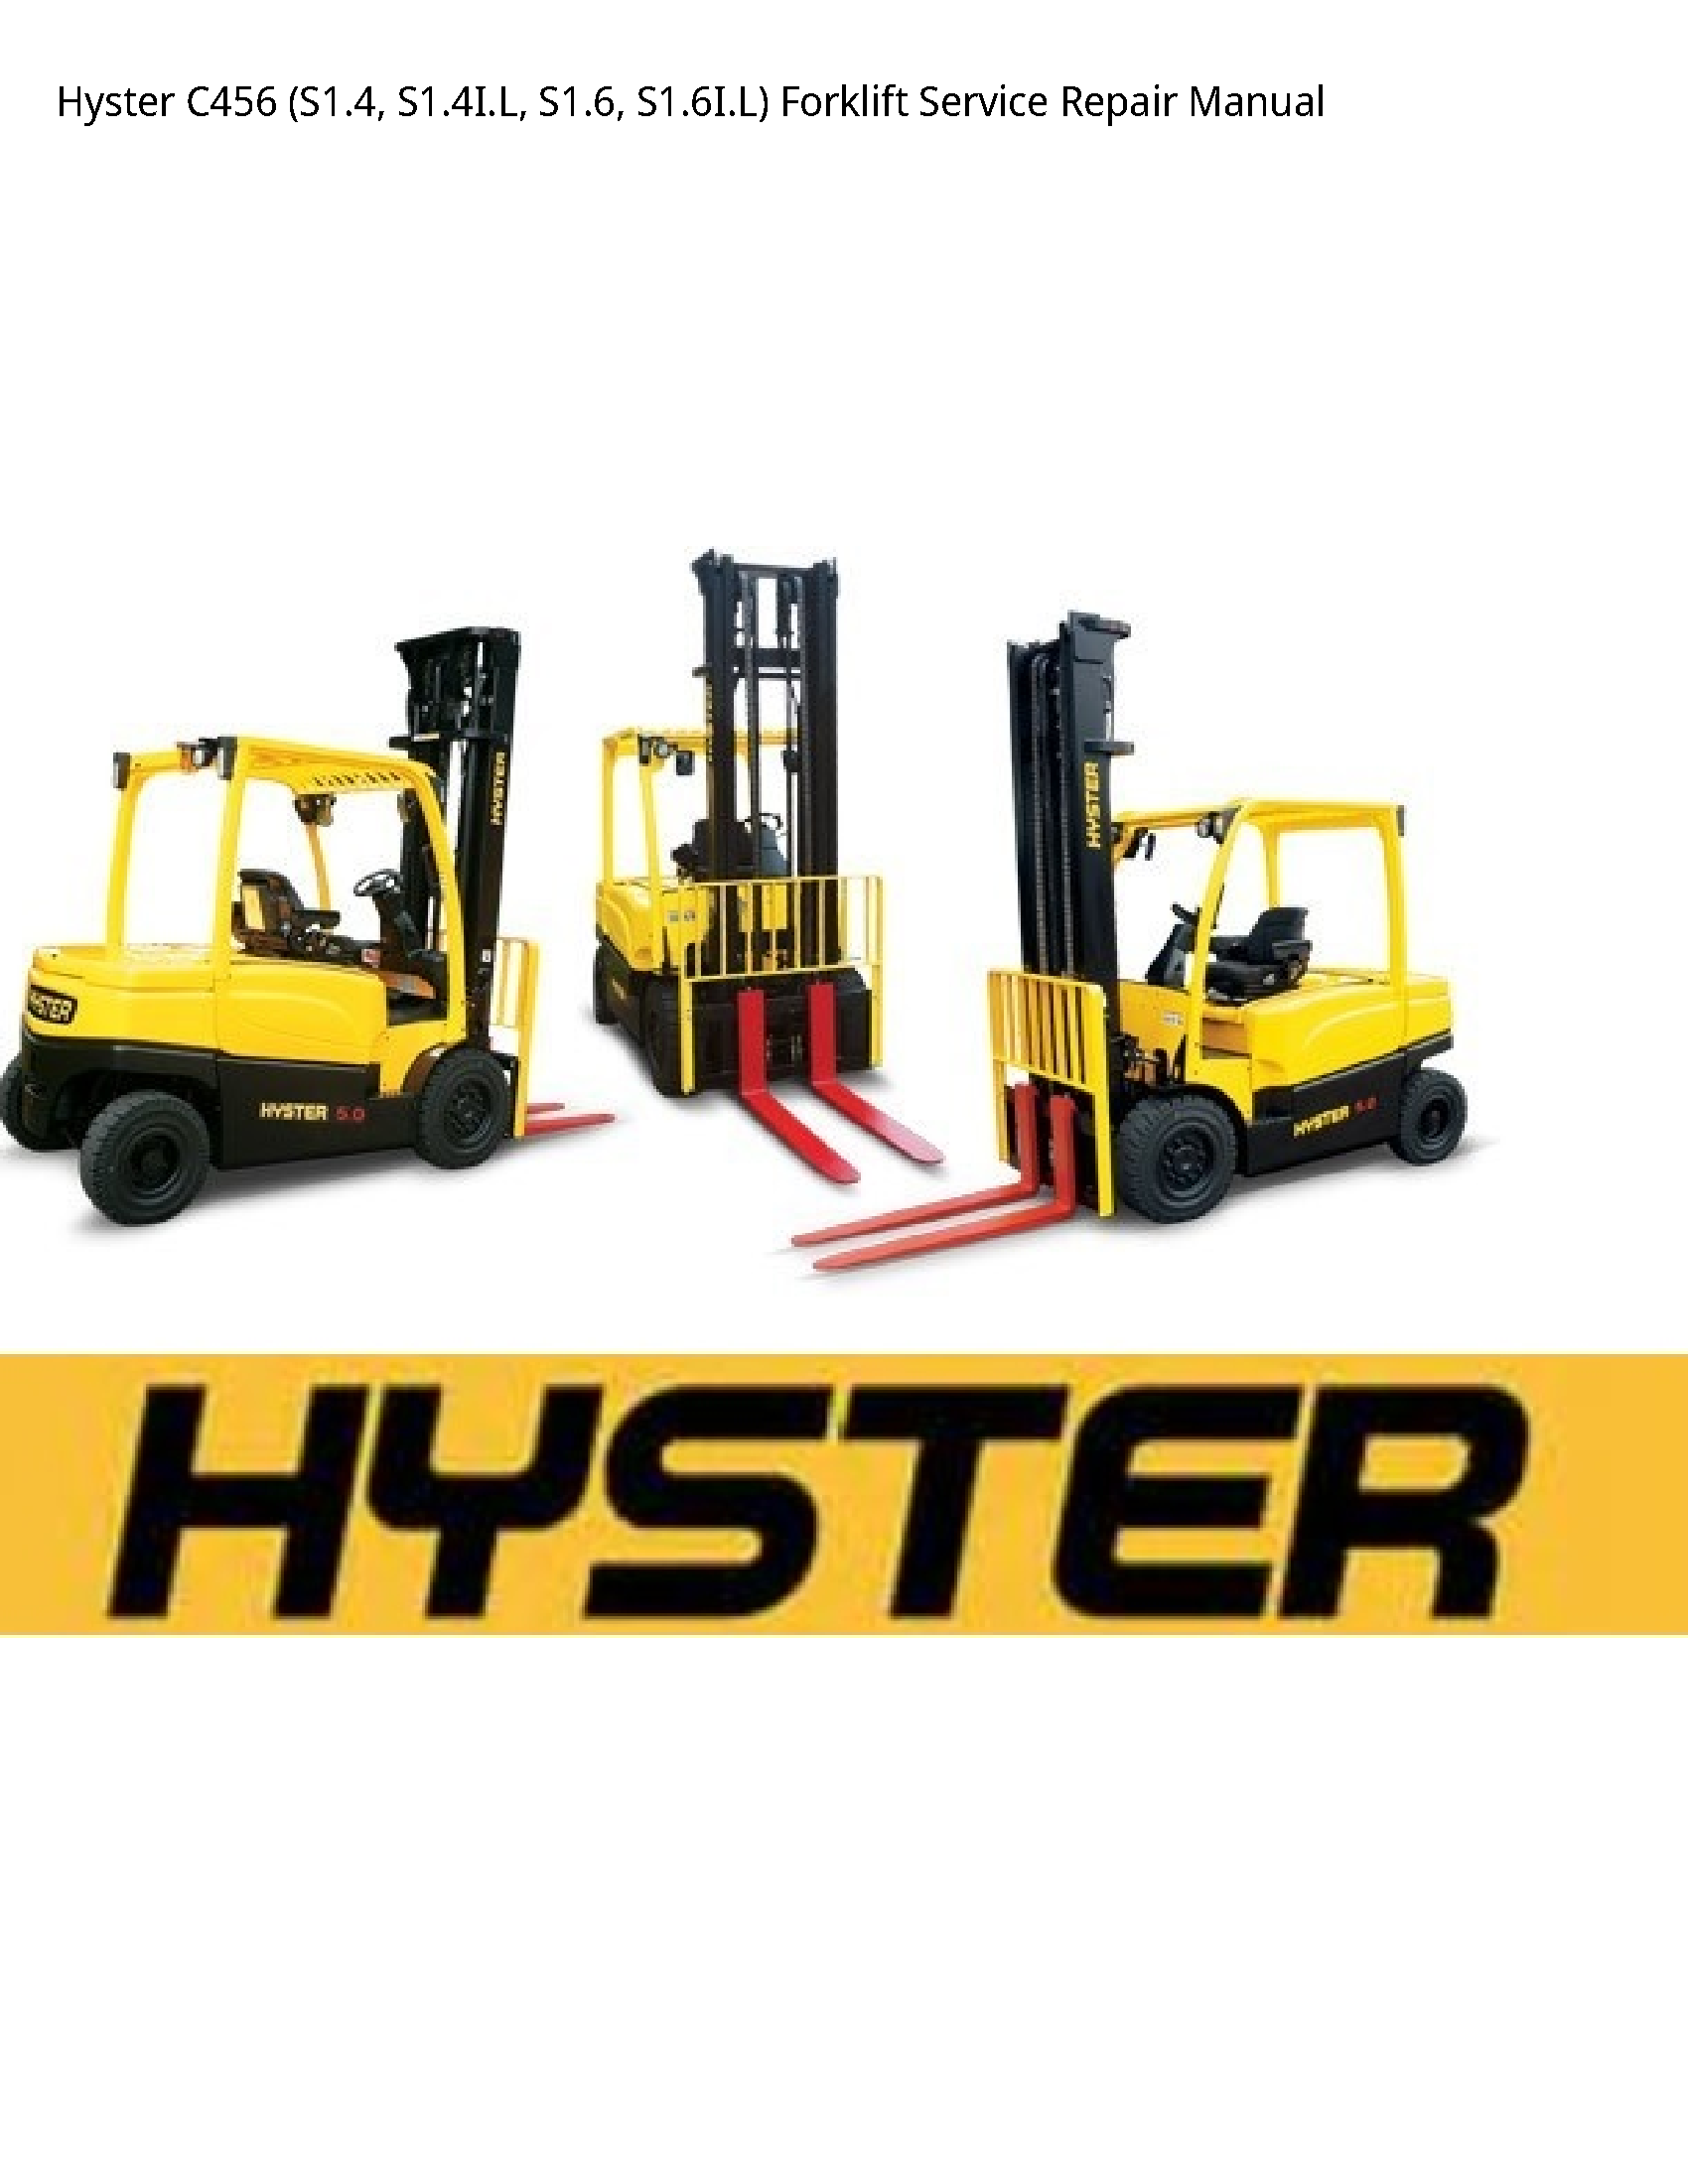 Hyster C456 Forklift manual